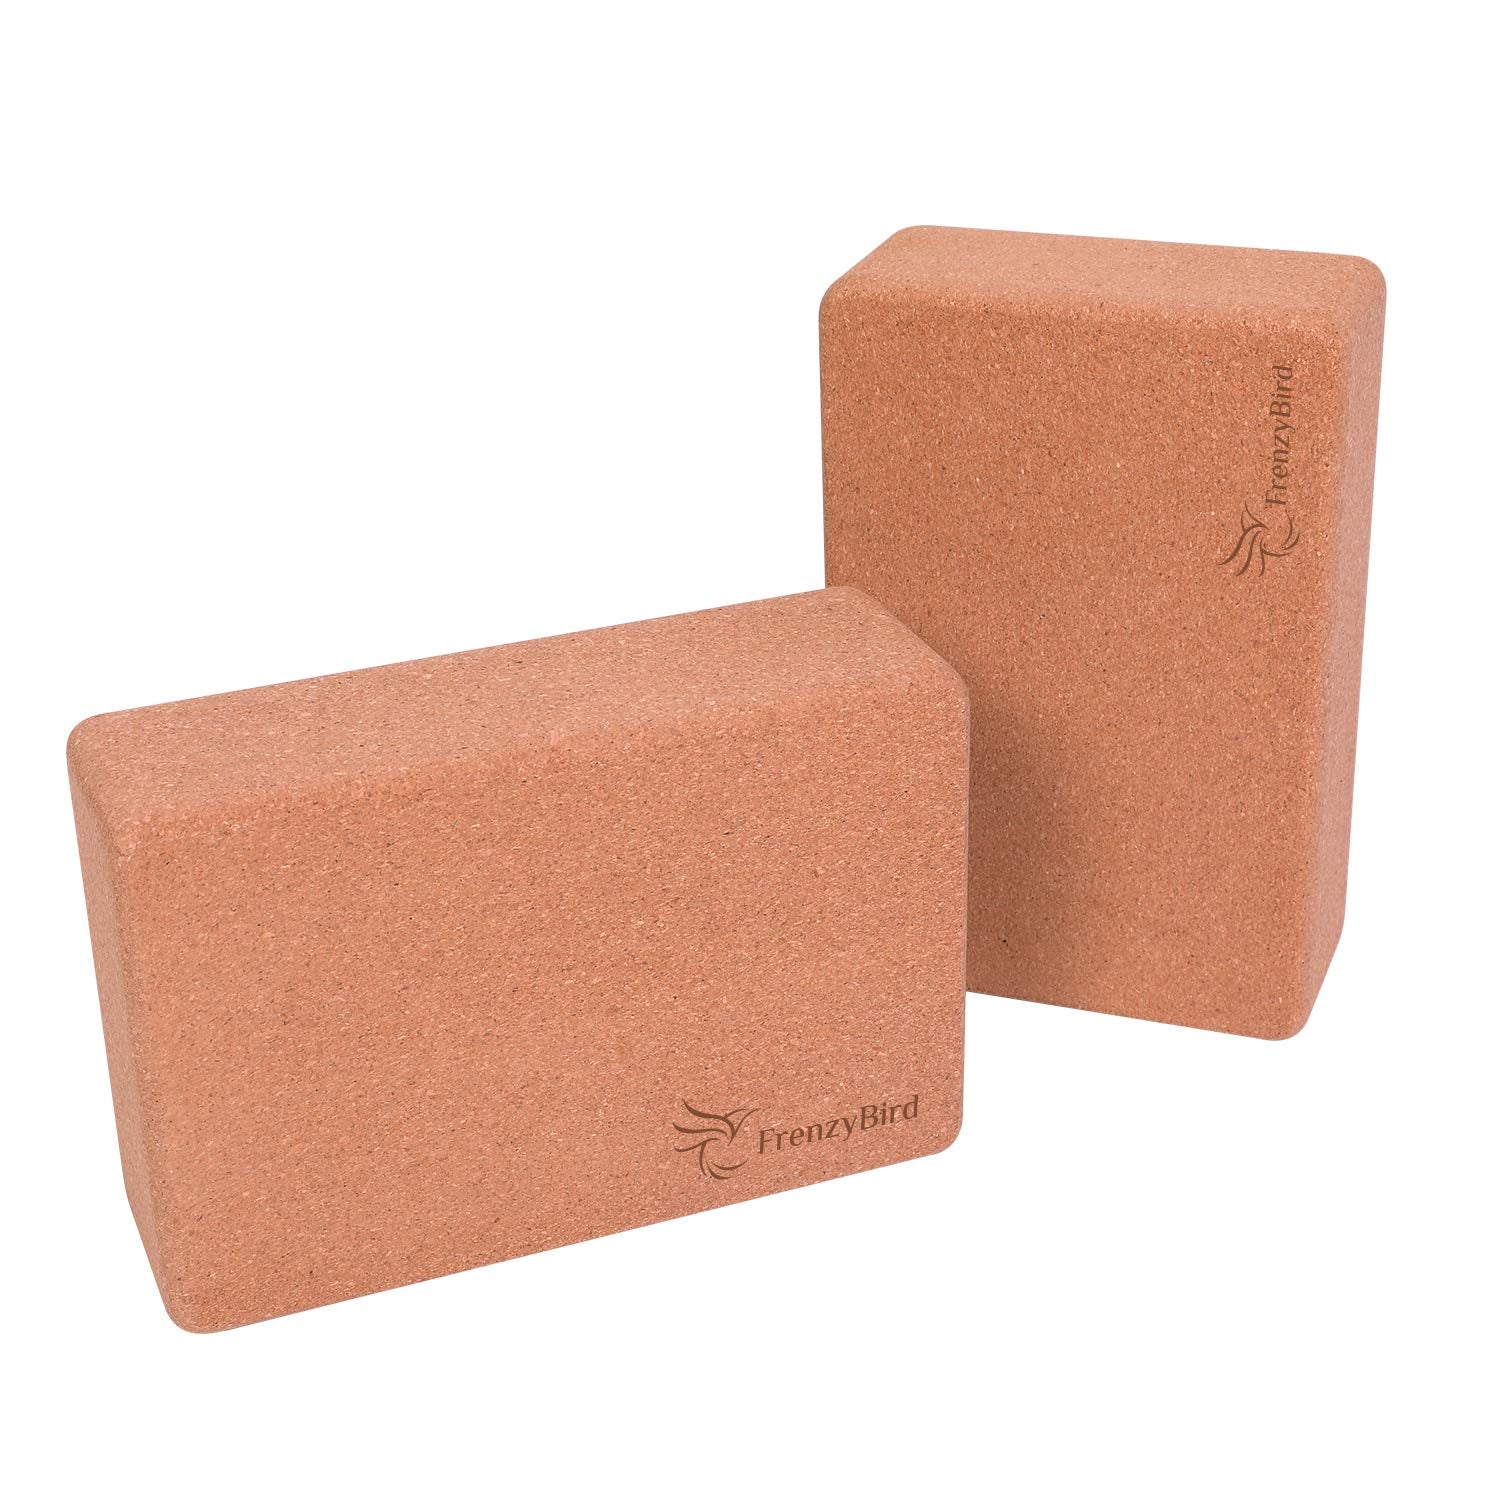 High Quality Cork Yoga Block- 2 Pack